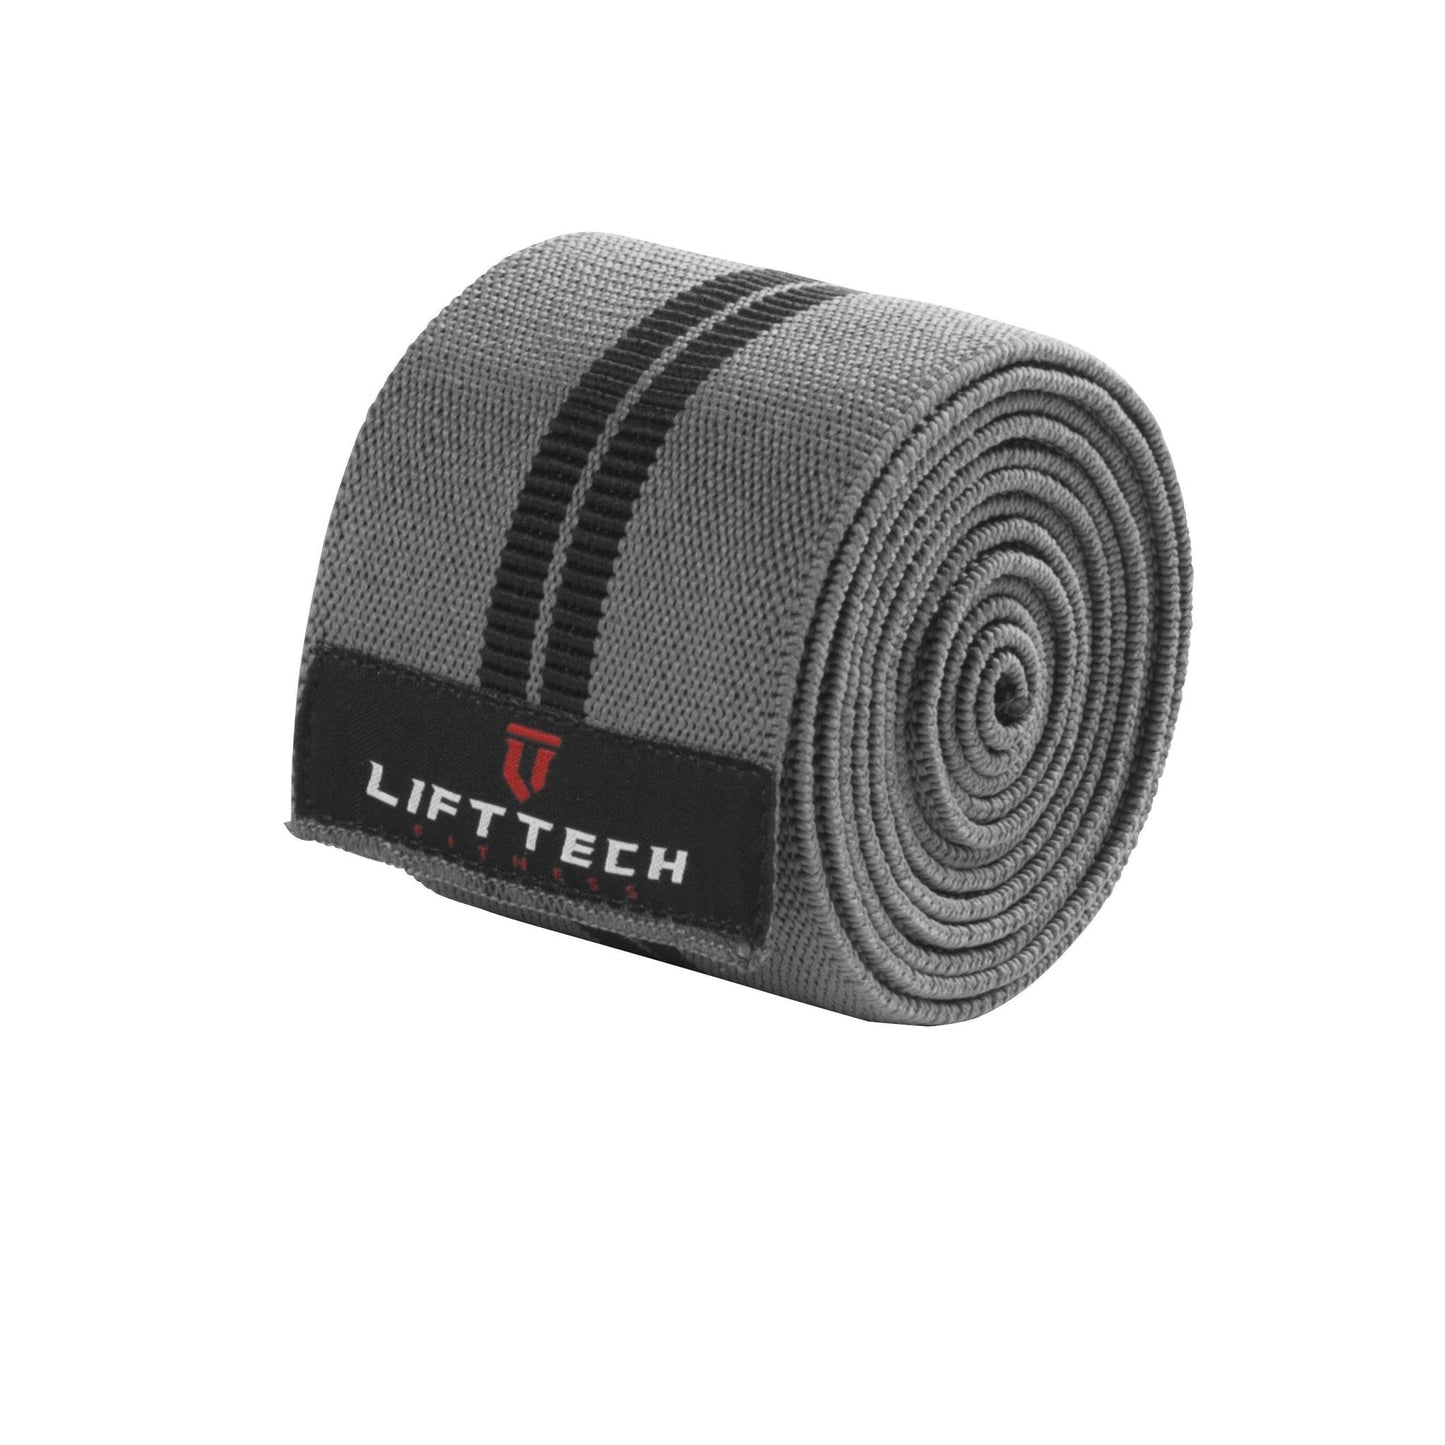 Lift Tech Fitness Comp Knee Wraps Wraps Lift Tech Fitness 